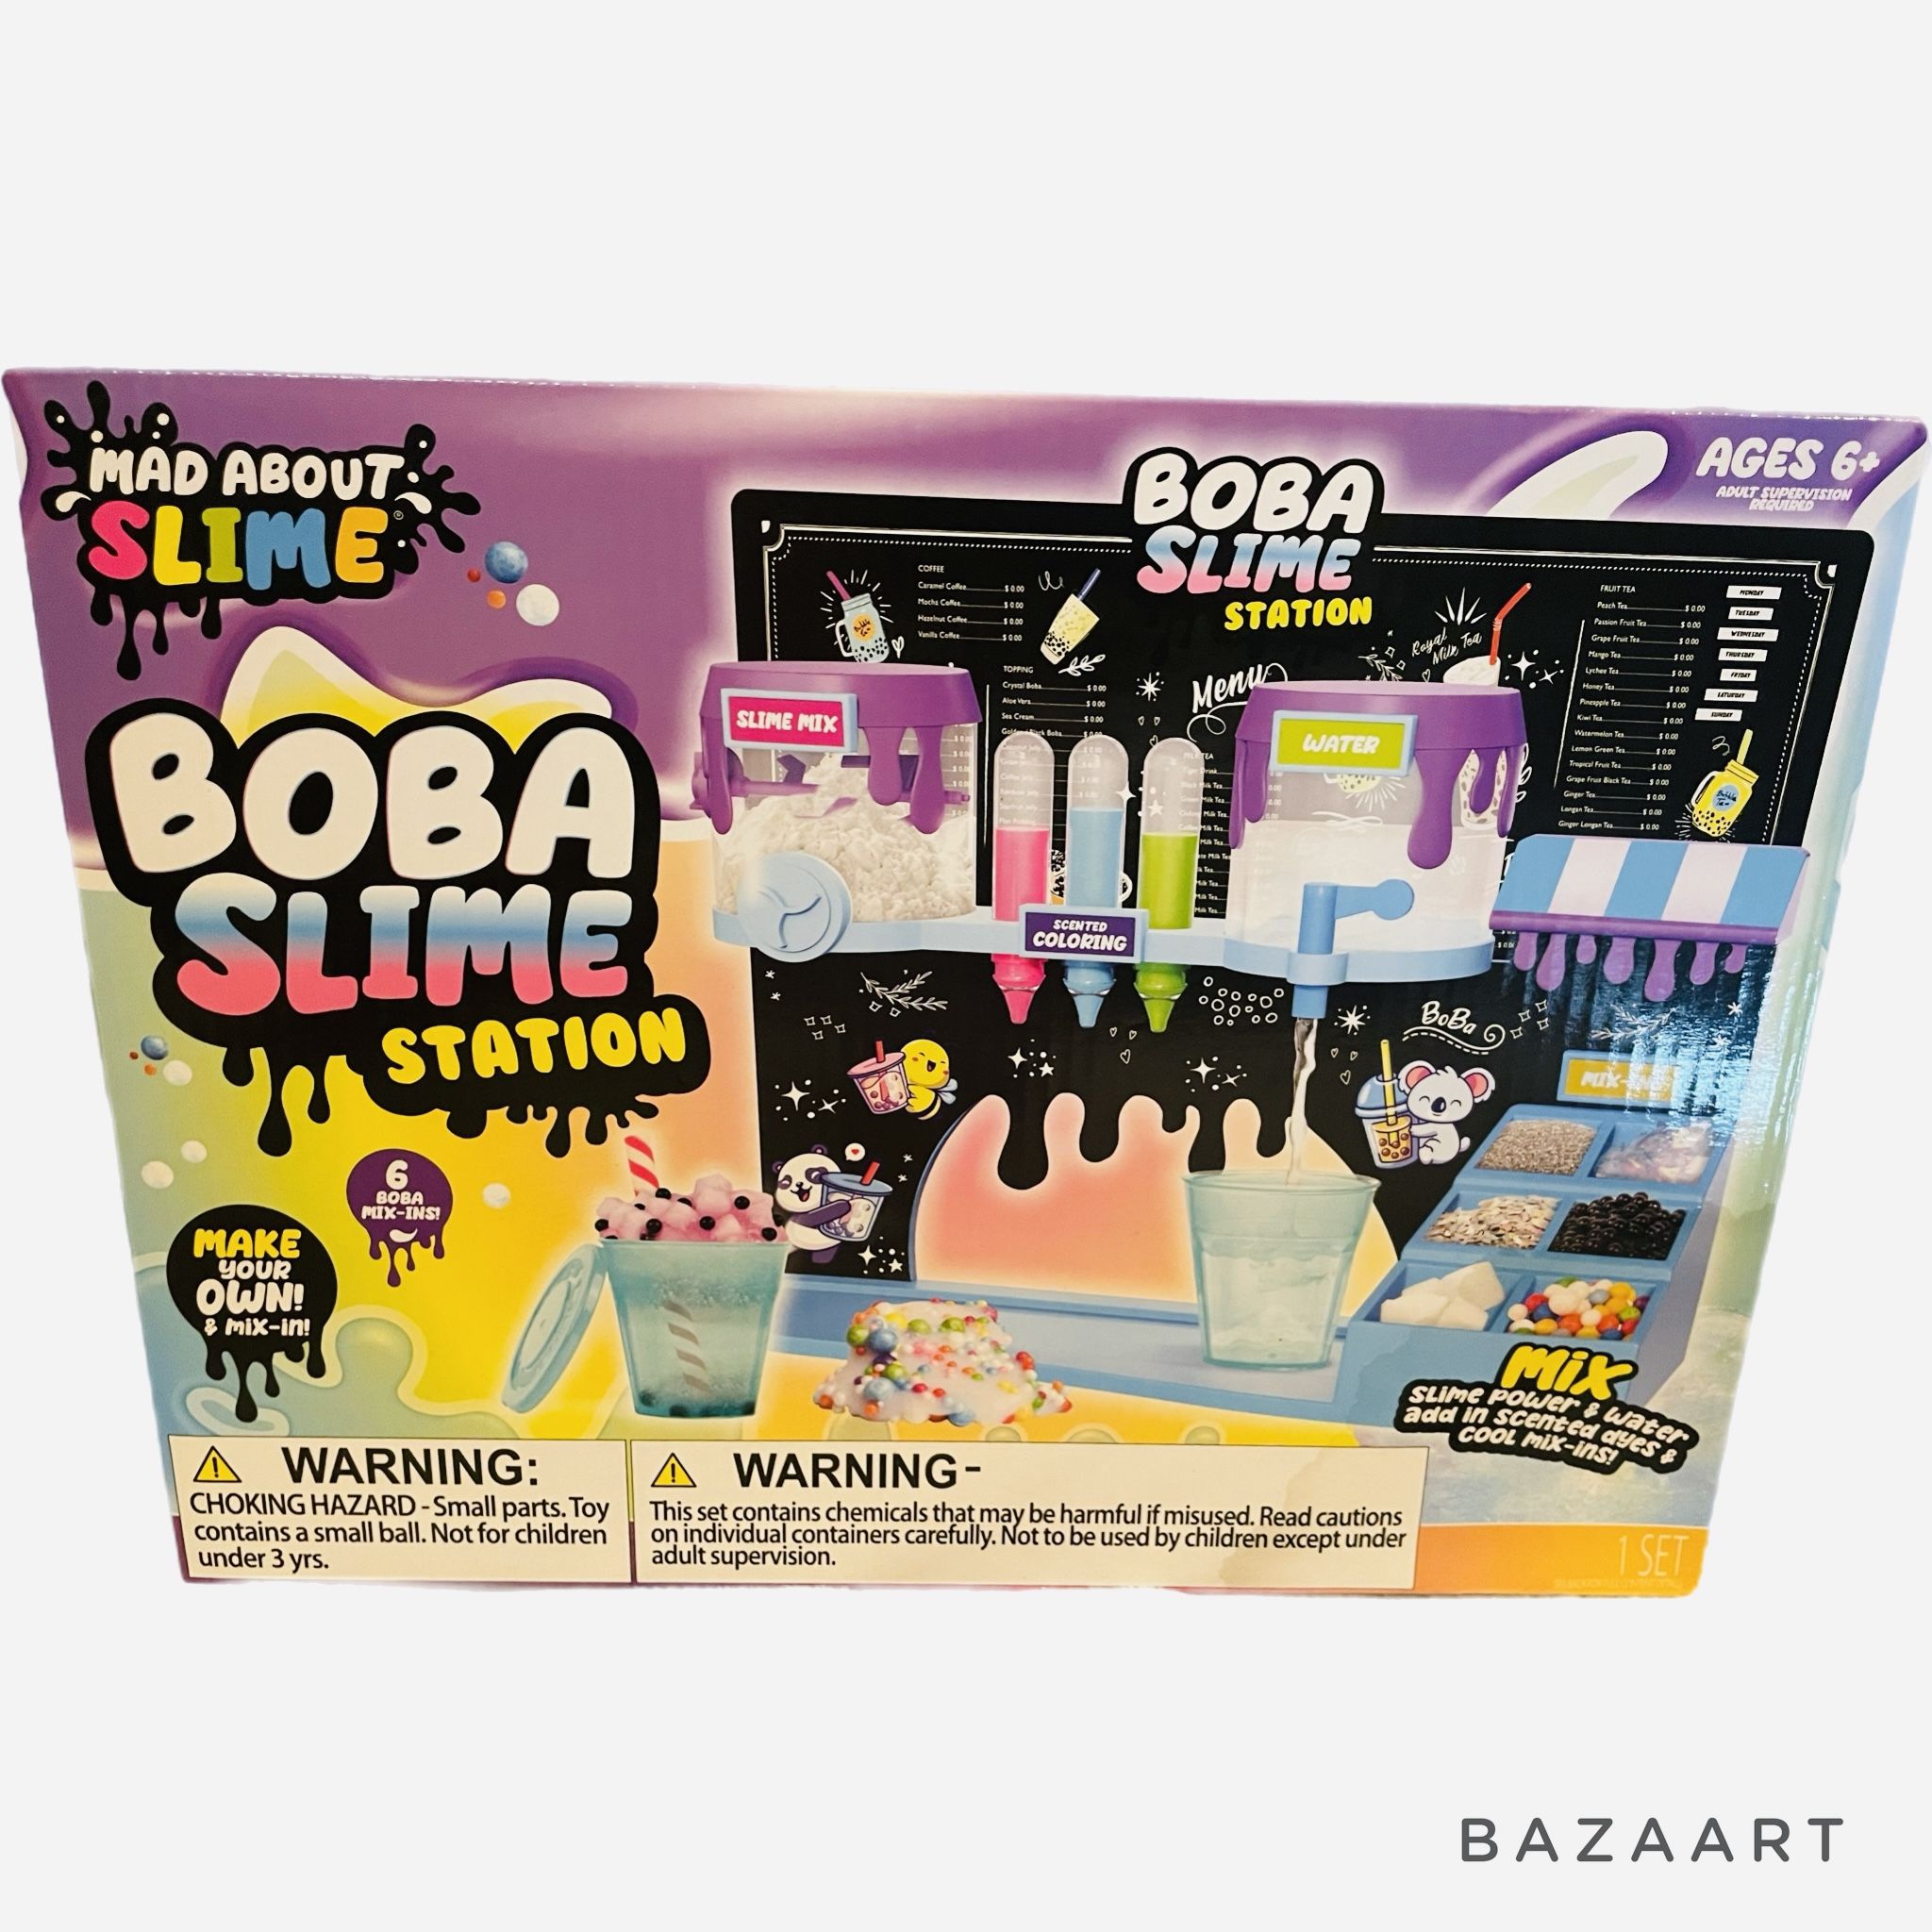 New Boba Slime Station  Slime Lab Kit made about slime